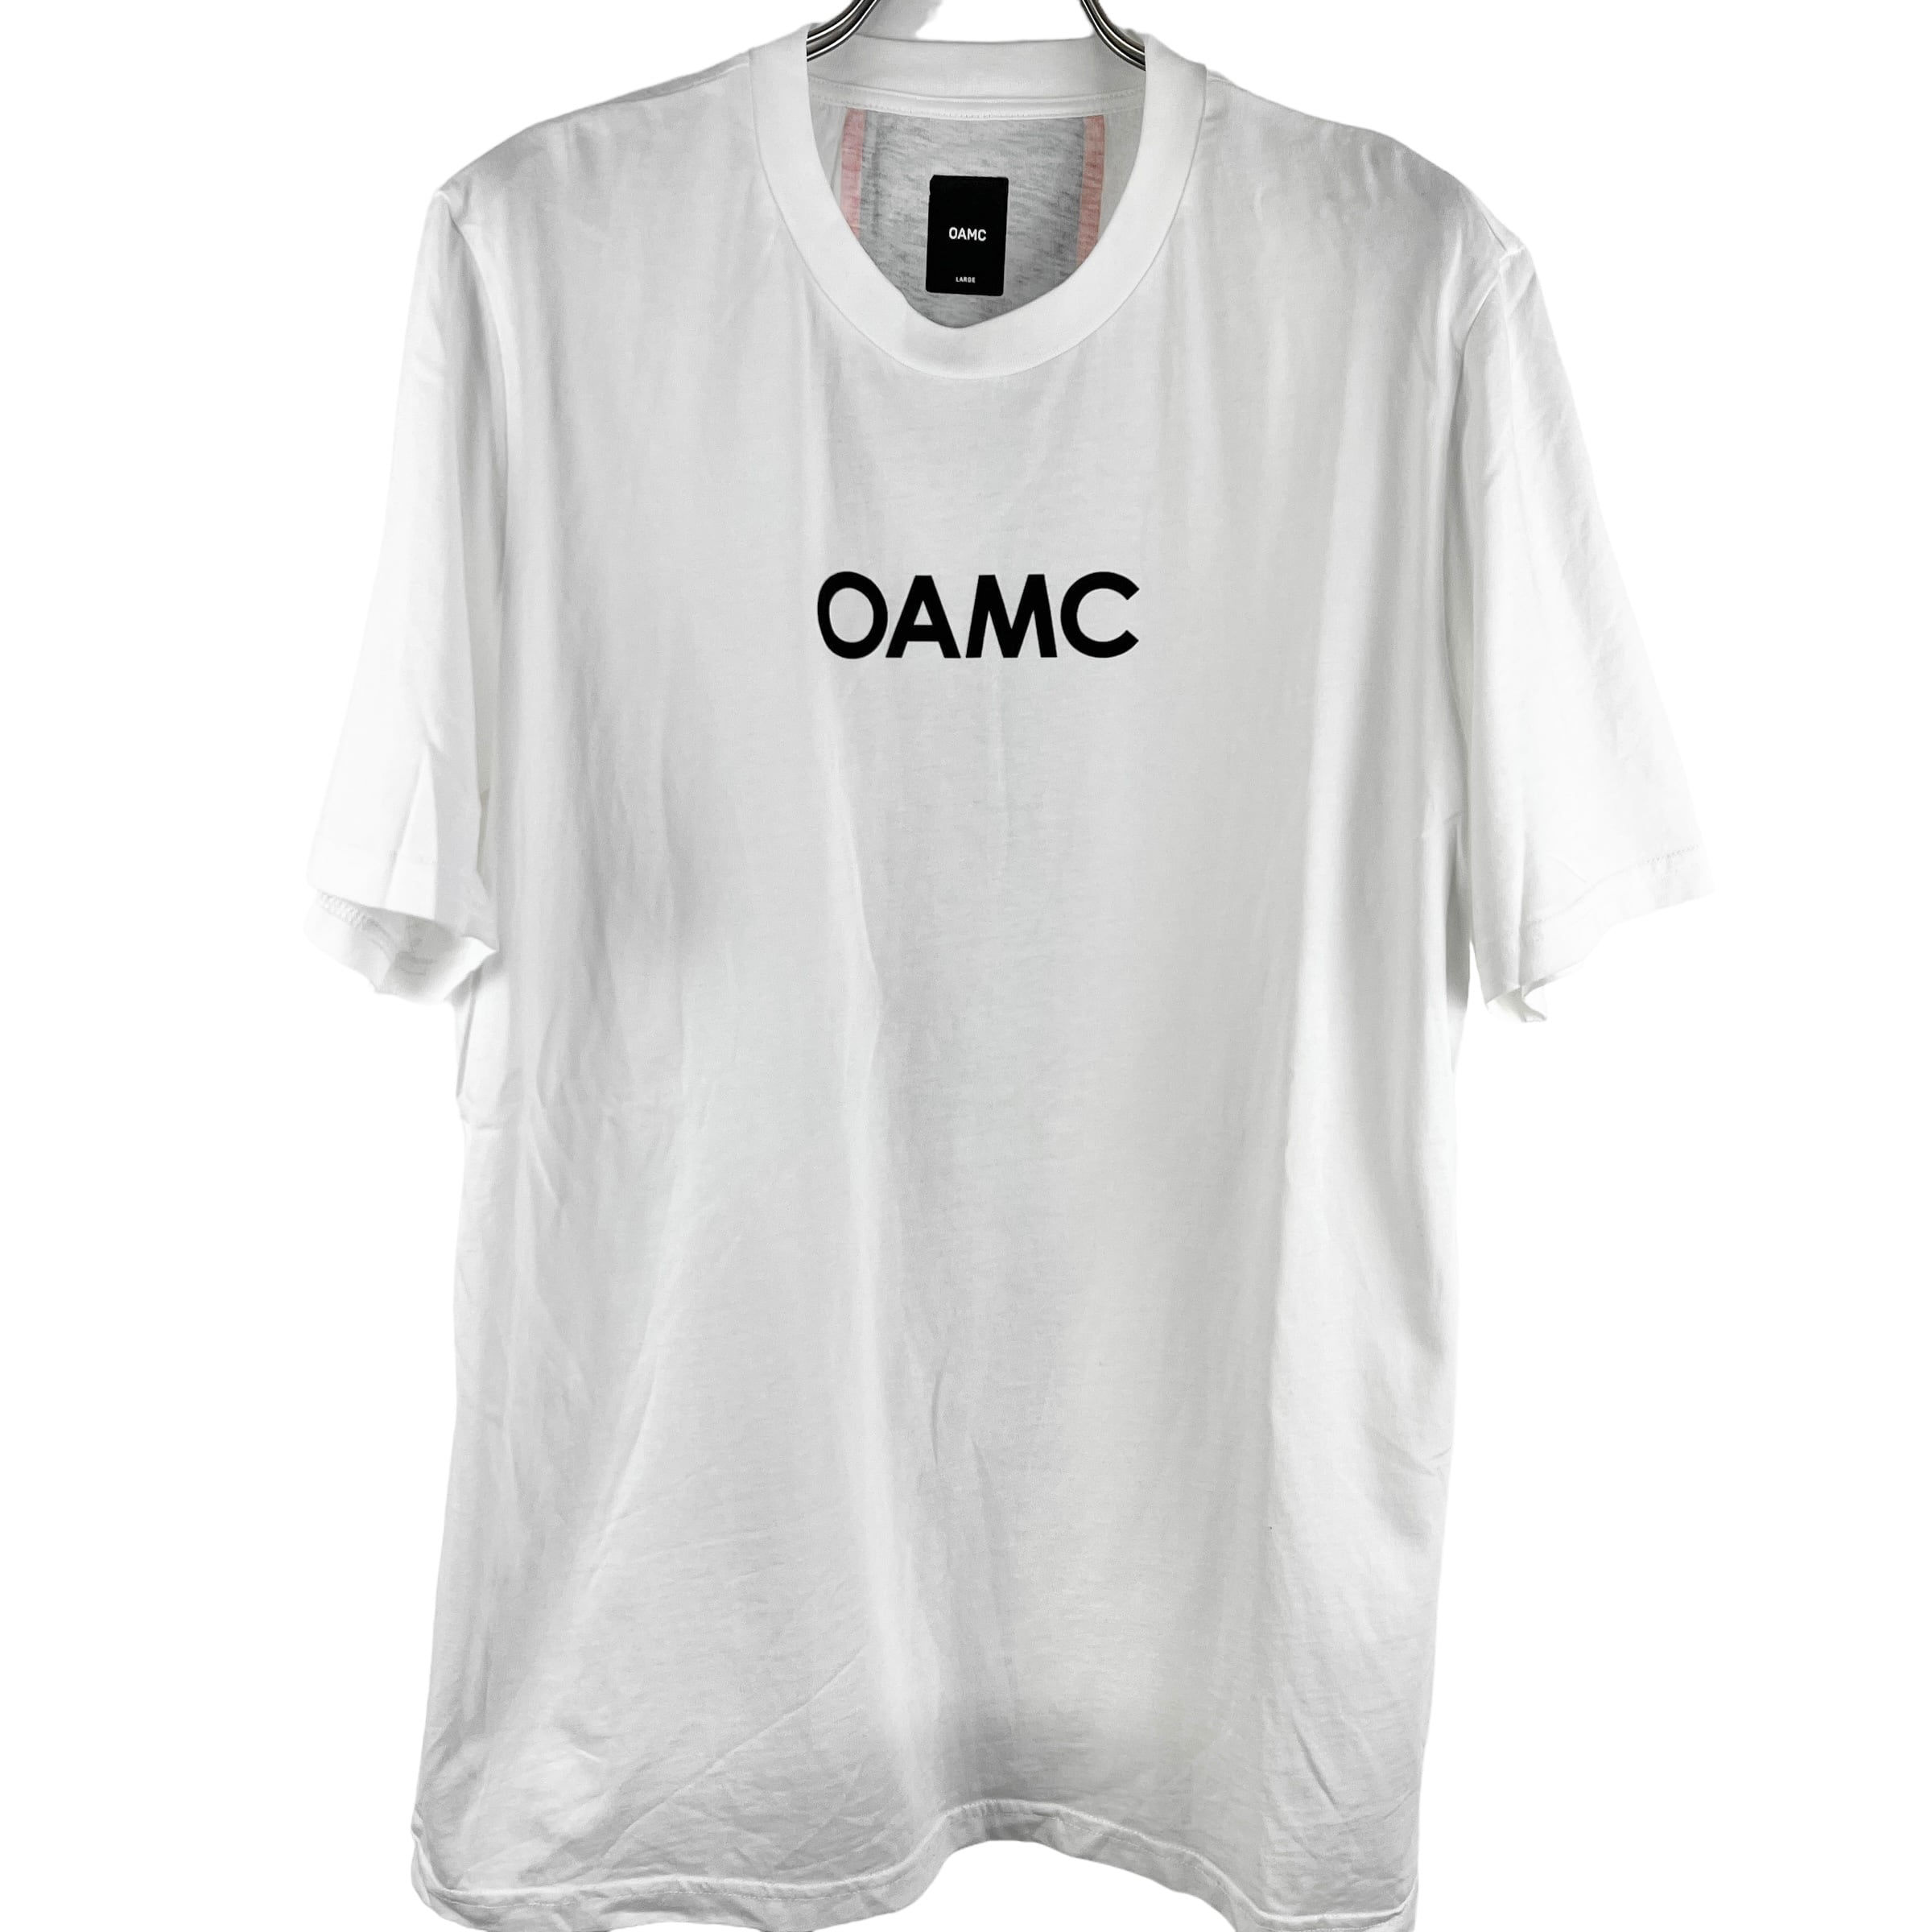 OAMC(オーエーエムシー) Back Graphic Shortsleeve T Shirt (white)